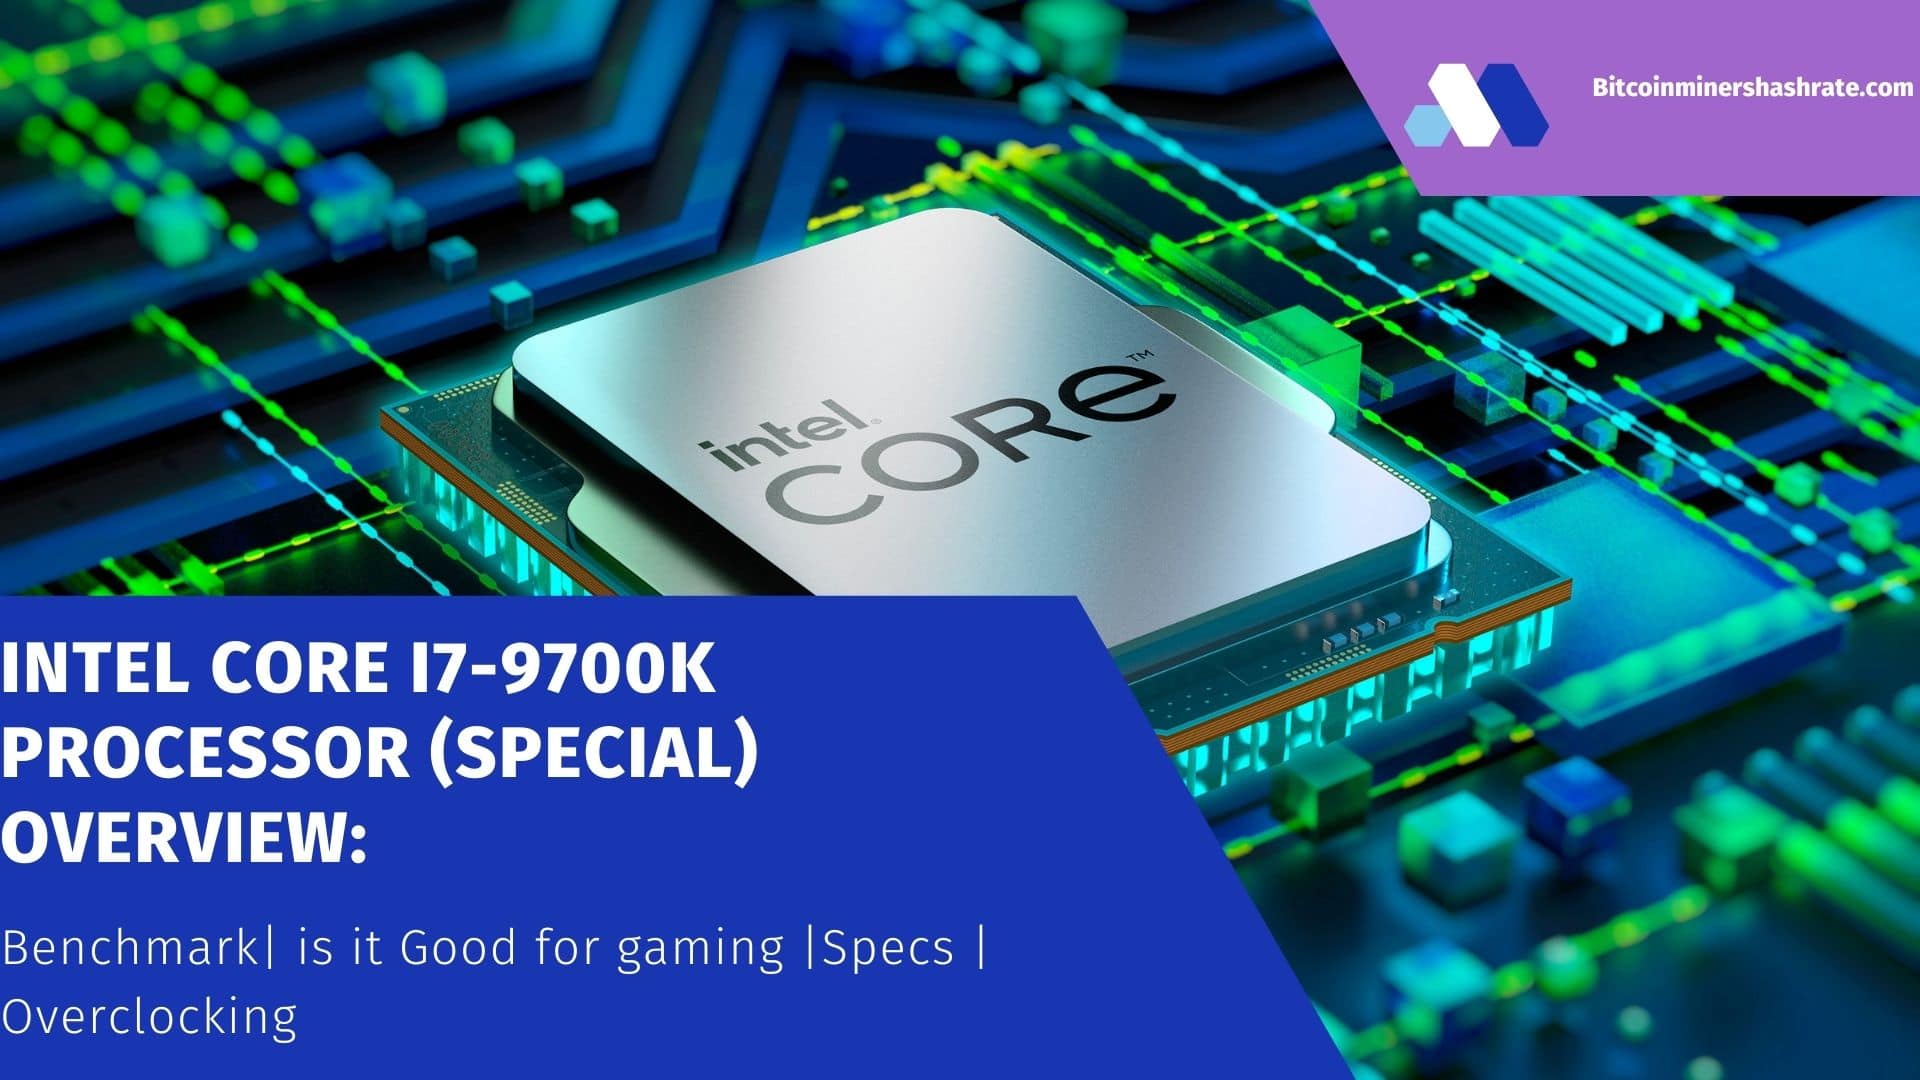 Intel Core i7-9700K Processor: